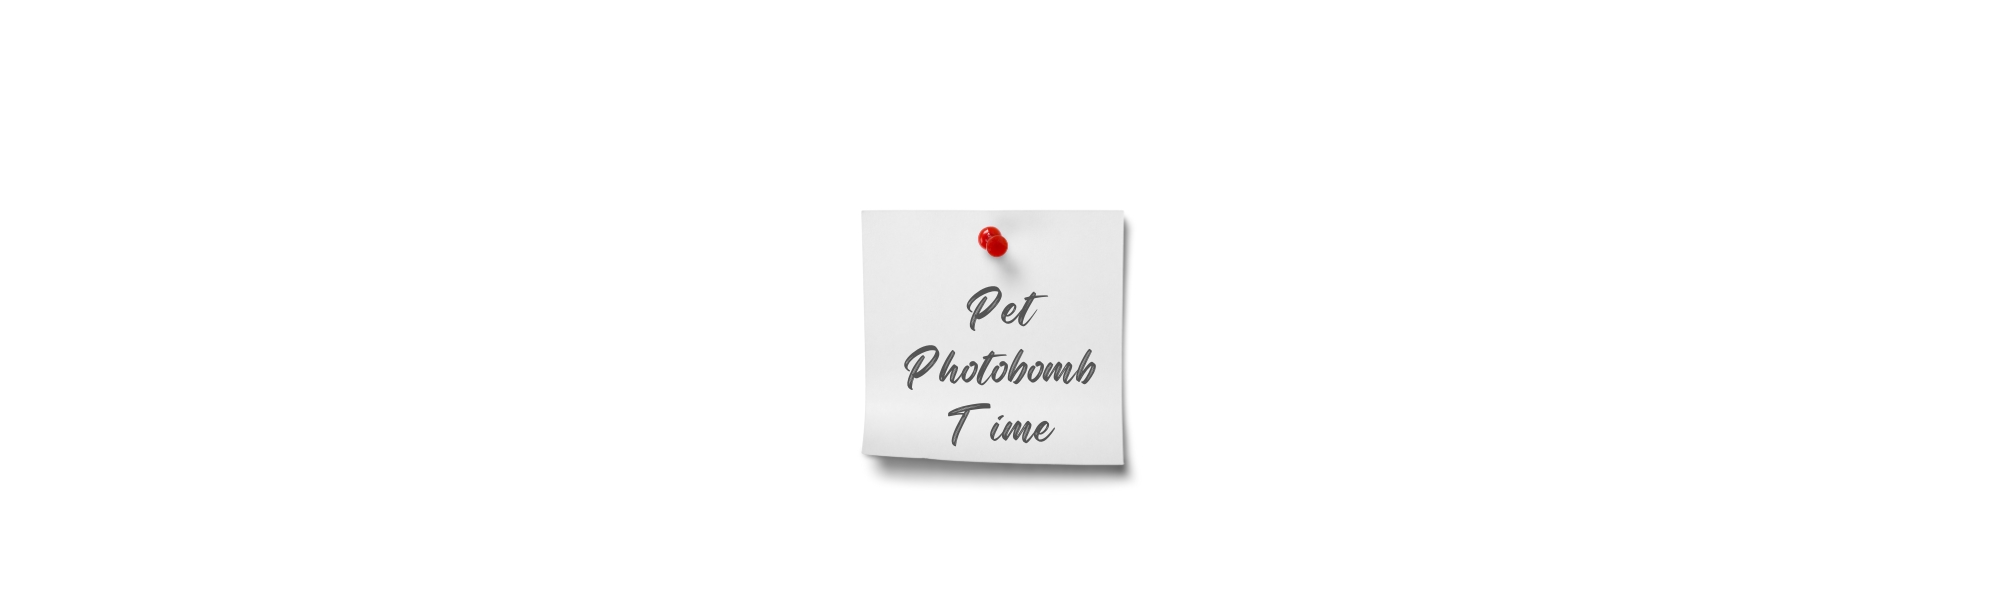 Pet Photobomb Time